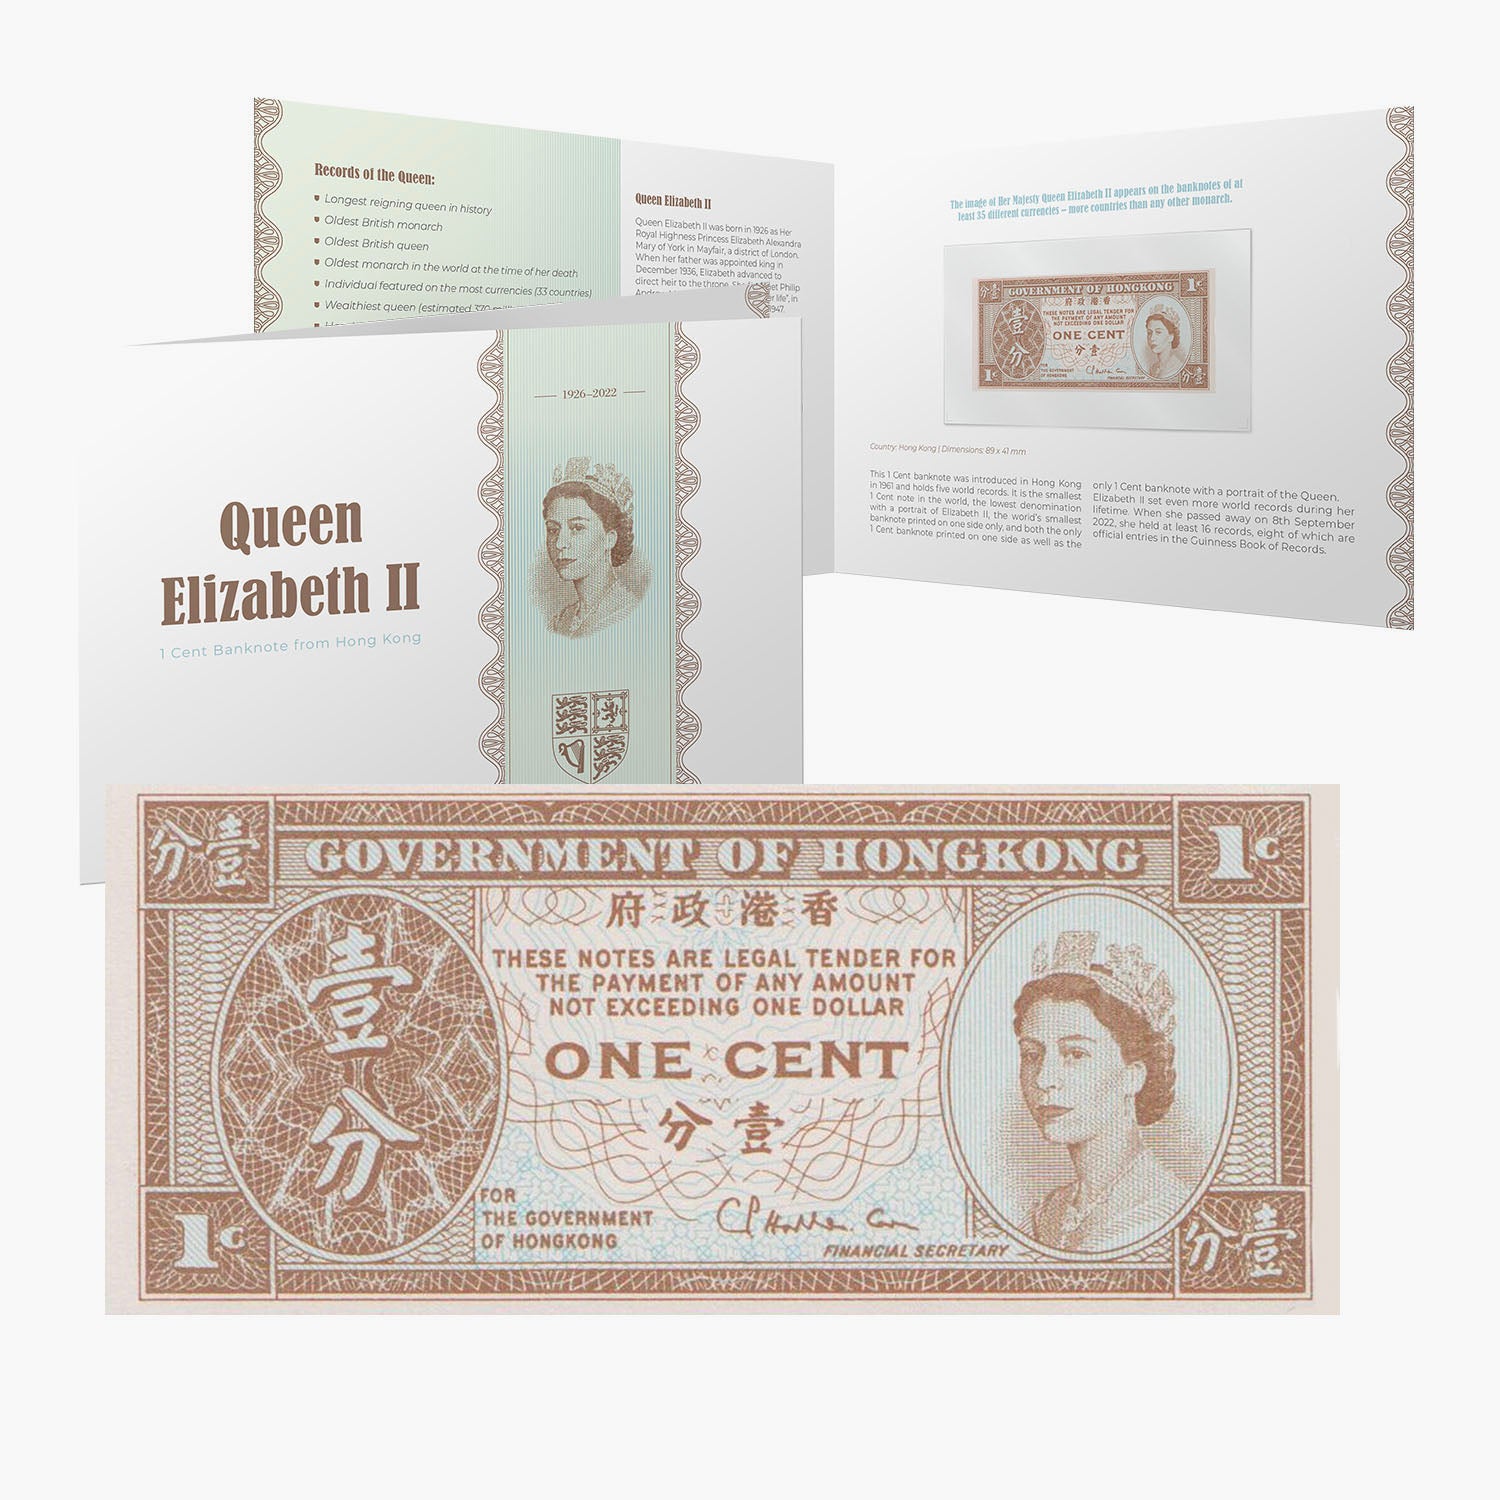 Her Majesty Queen Elizabeth II Royal Hong Kong Banknote